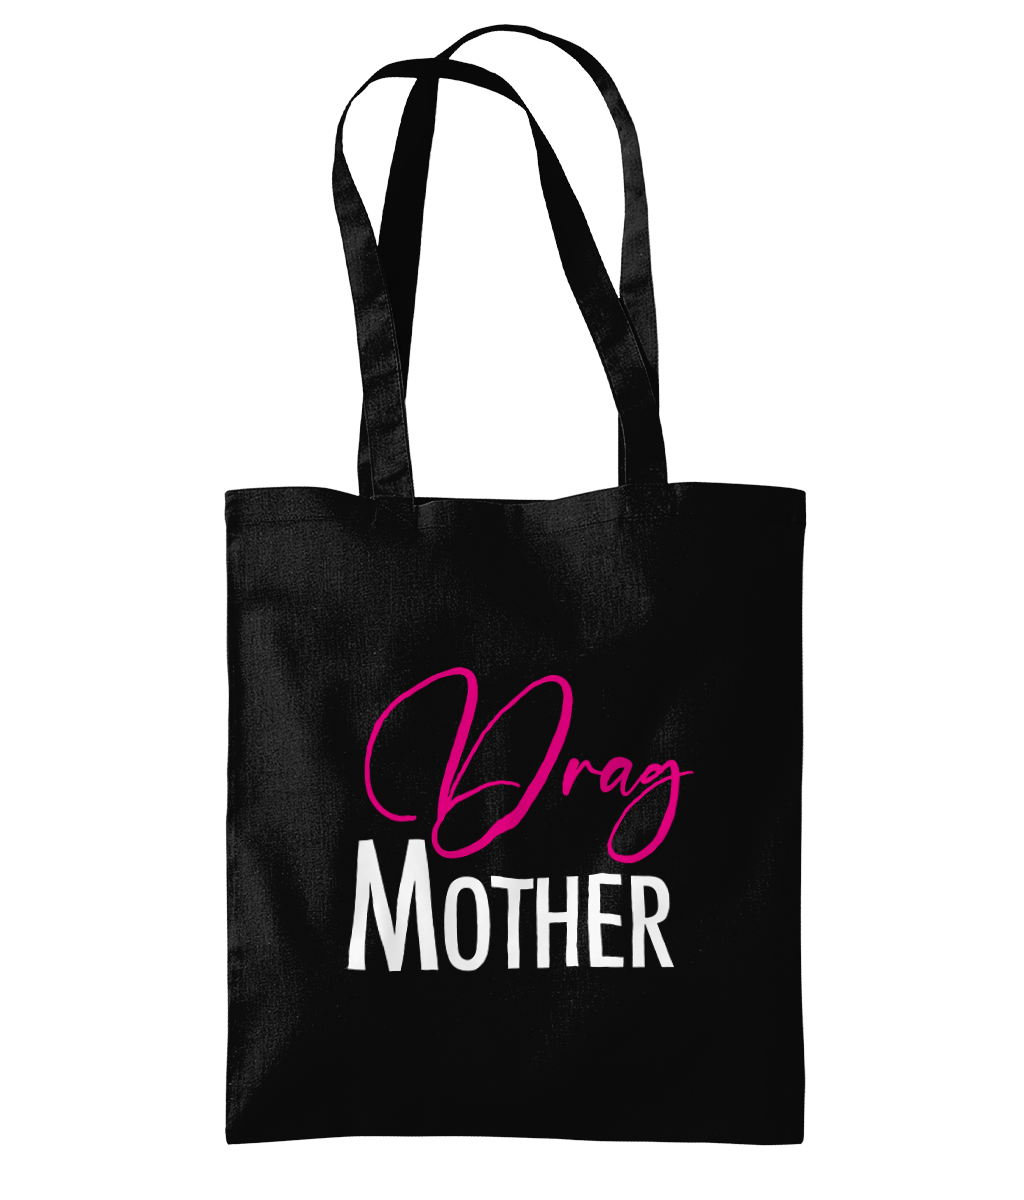 Snatched - Drag Mother Tote Bag